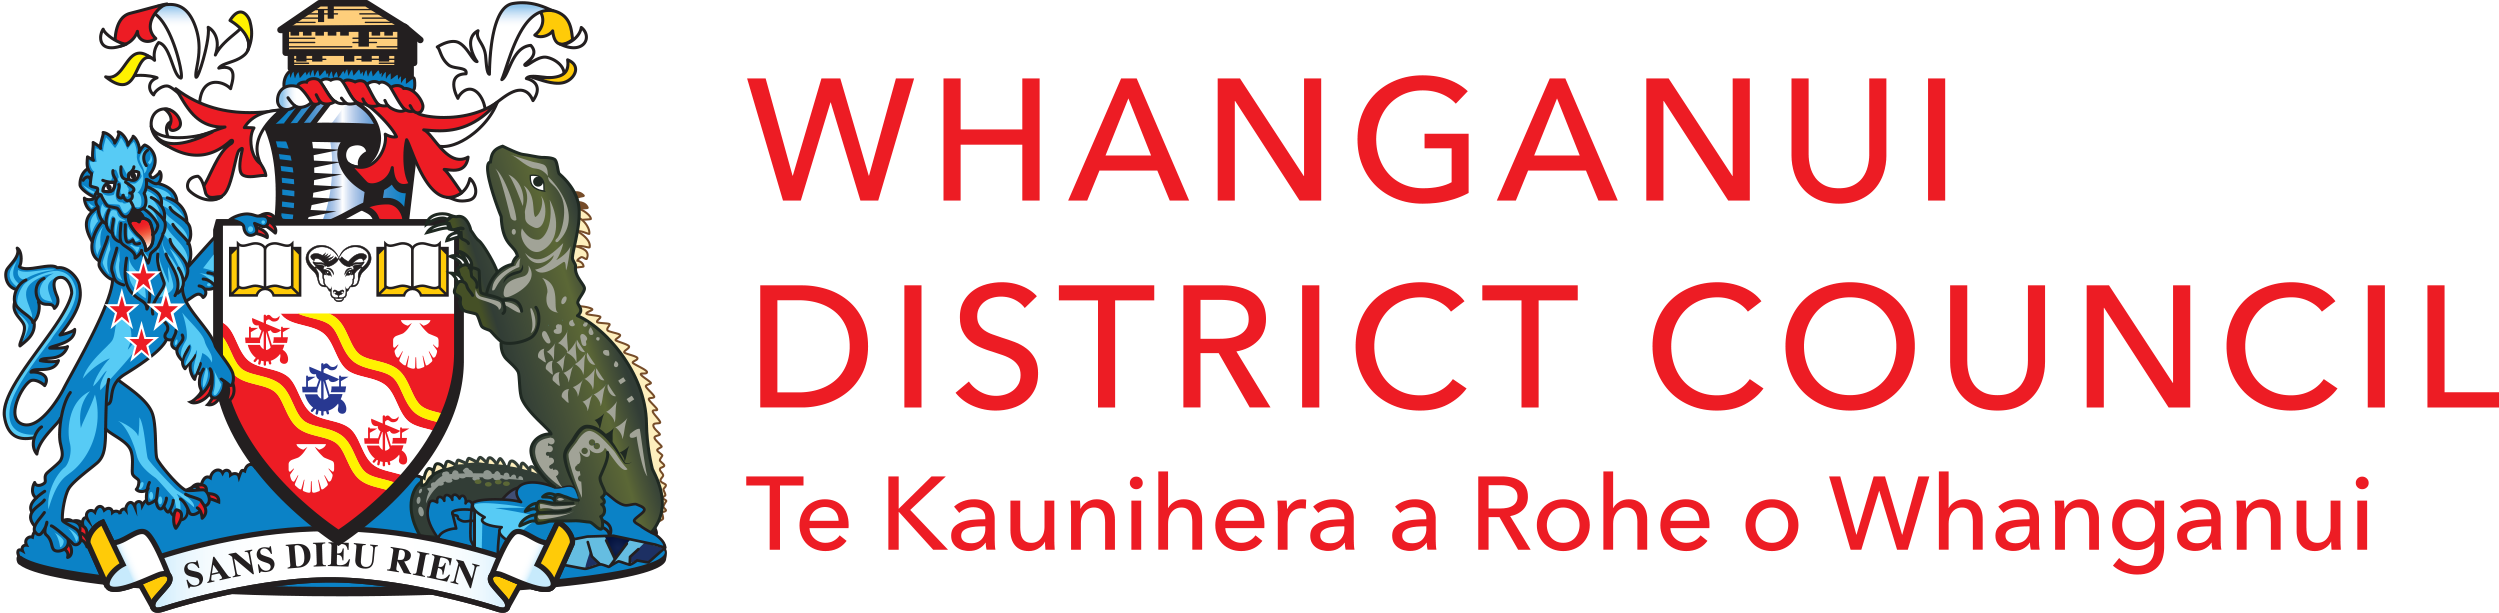 Whanganui District Council logo